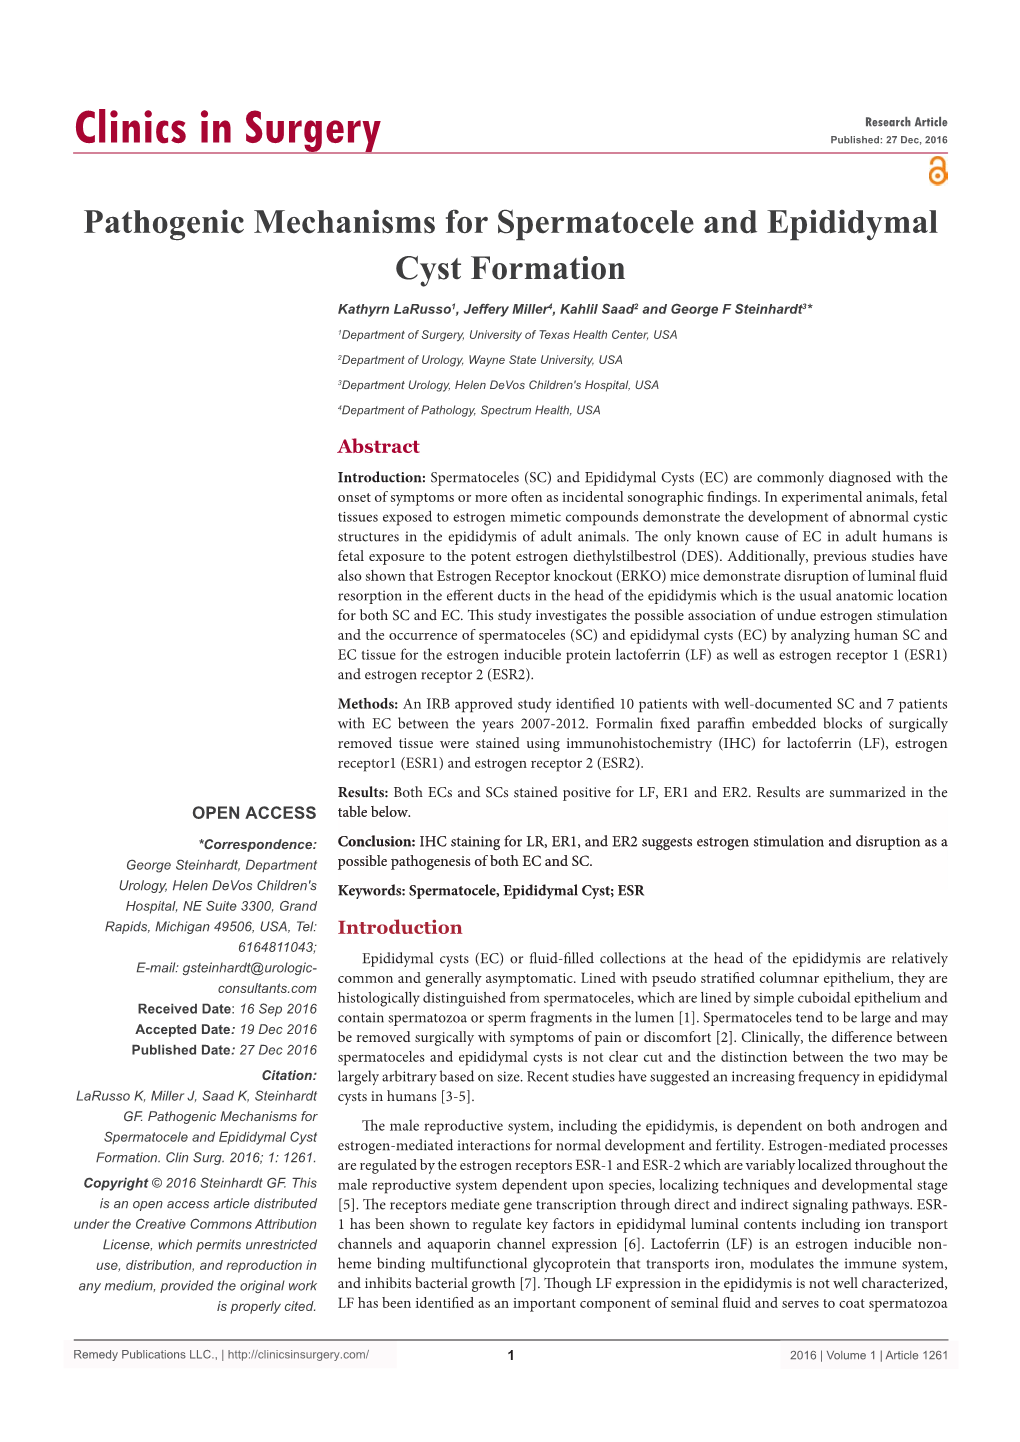 Pathogenic Mechanisms for Spermatocele and Epididymal Cyst Formation